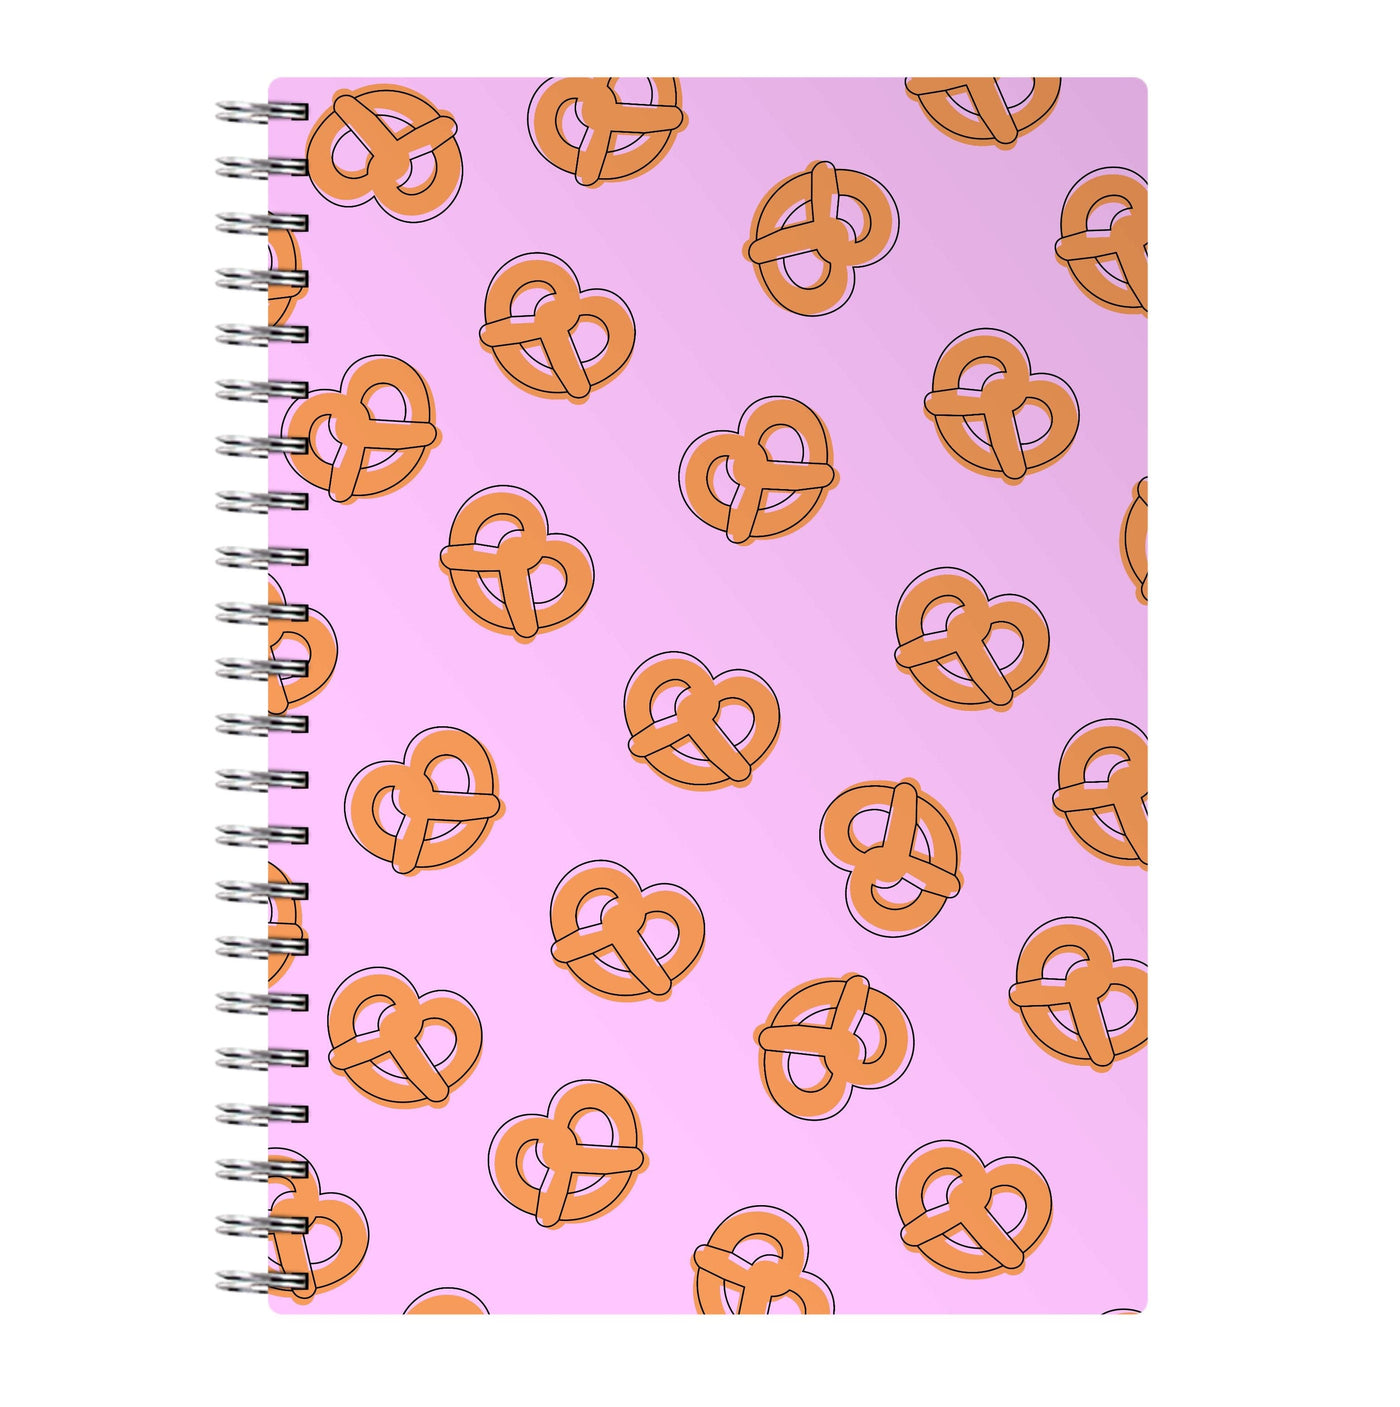 Pretzels - Fast Food Patterns Notebook